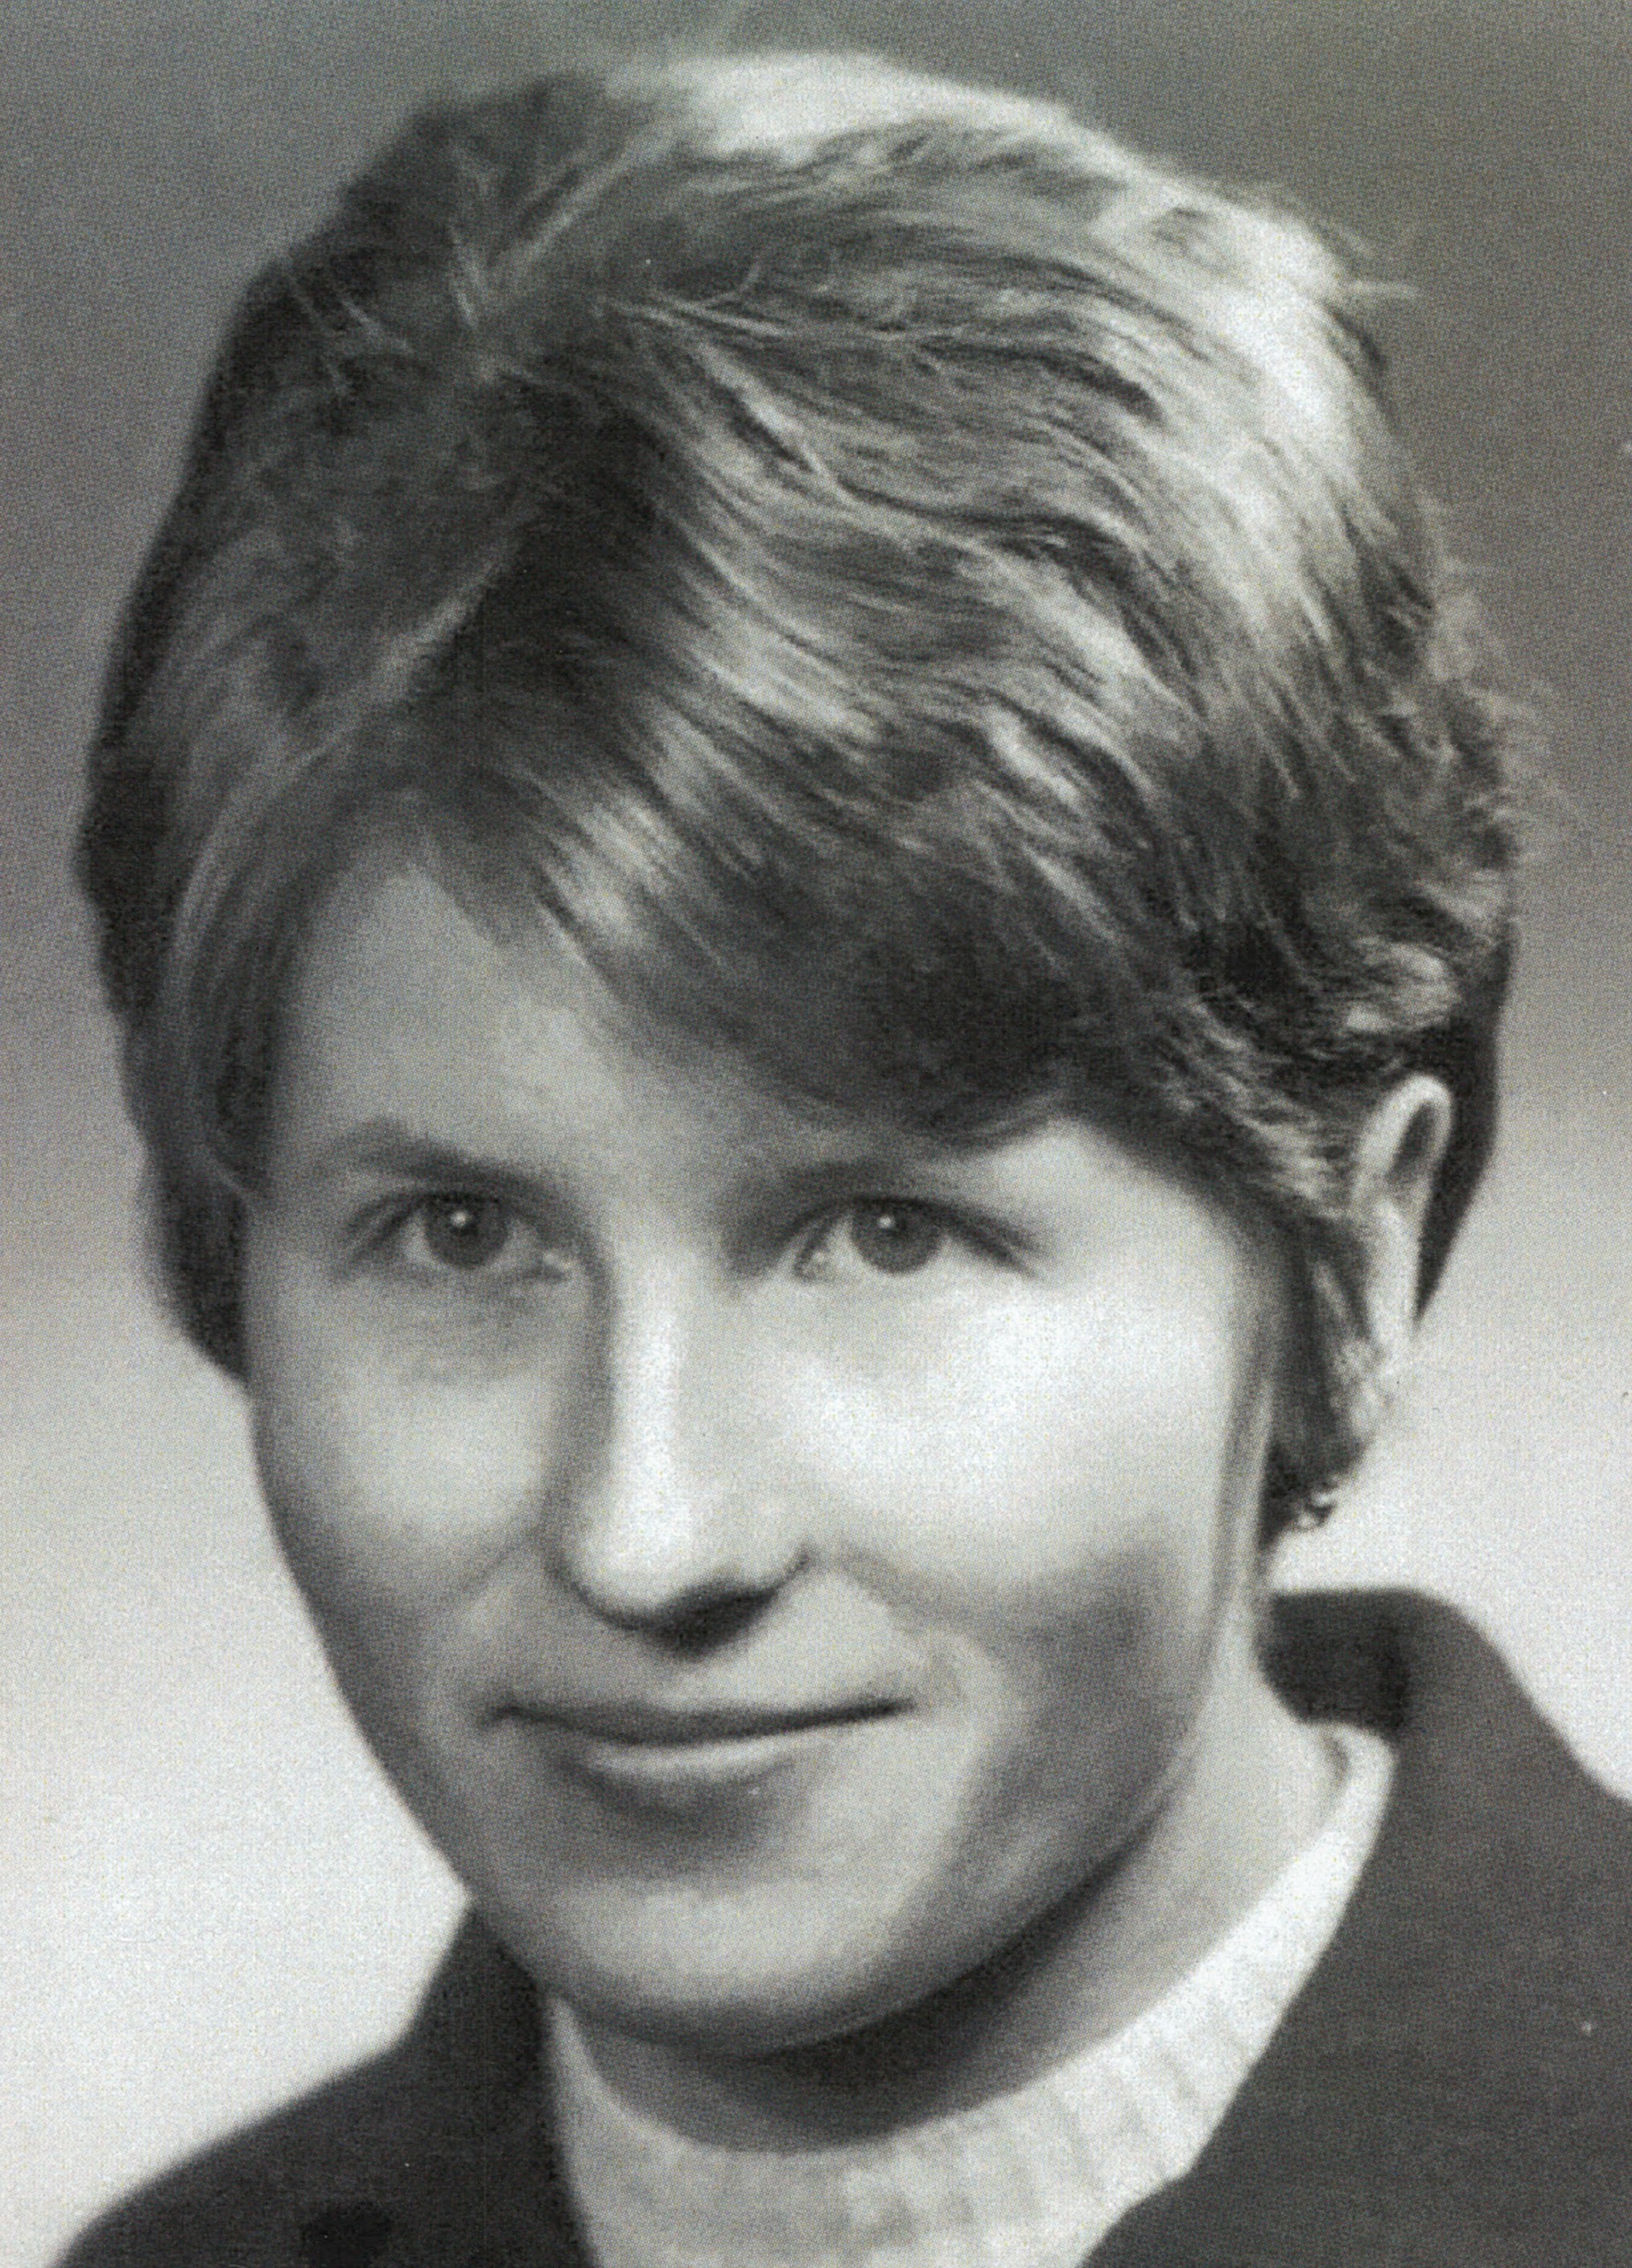 Marie Tejklová, 1967